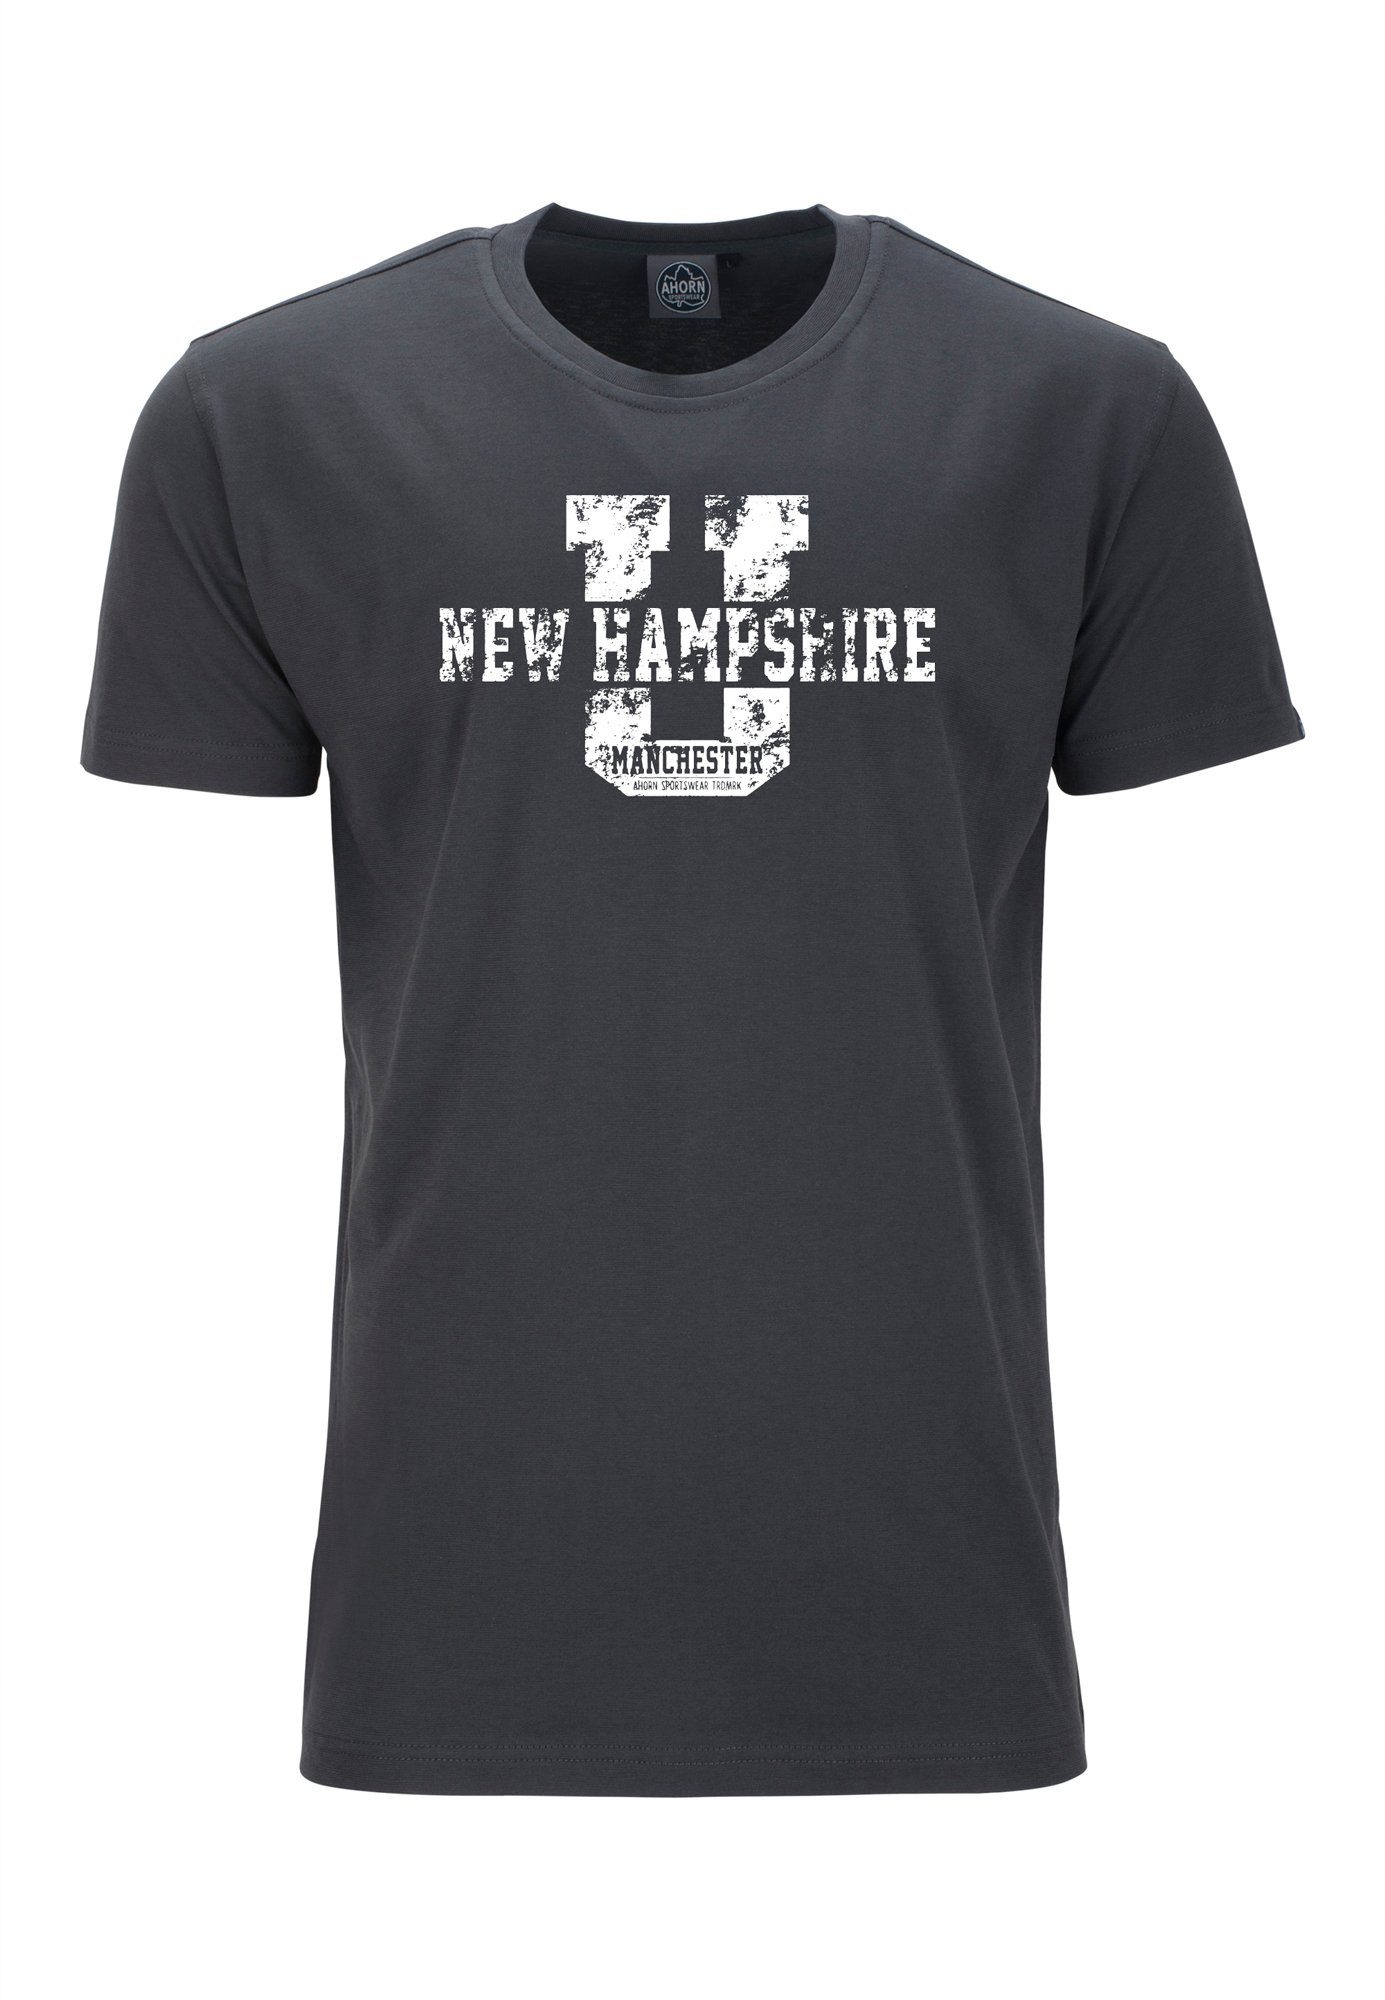 mit AHORN SPORTSWEAR Frontprint coolem HAMPSHIRE grau T-Shirt NEW